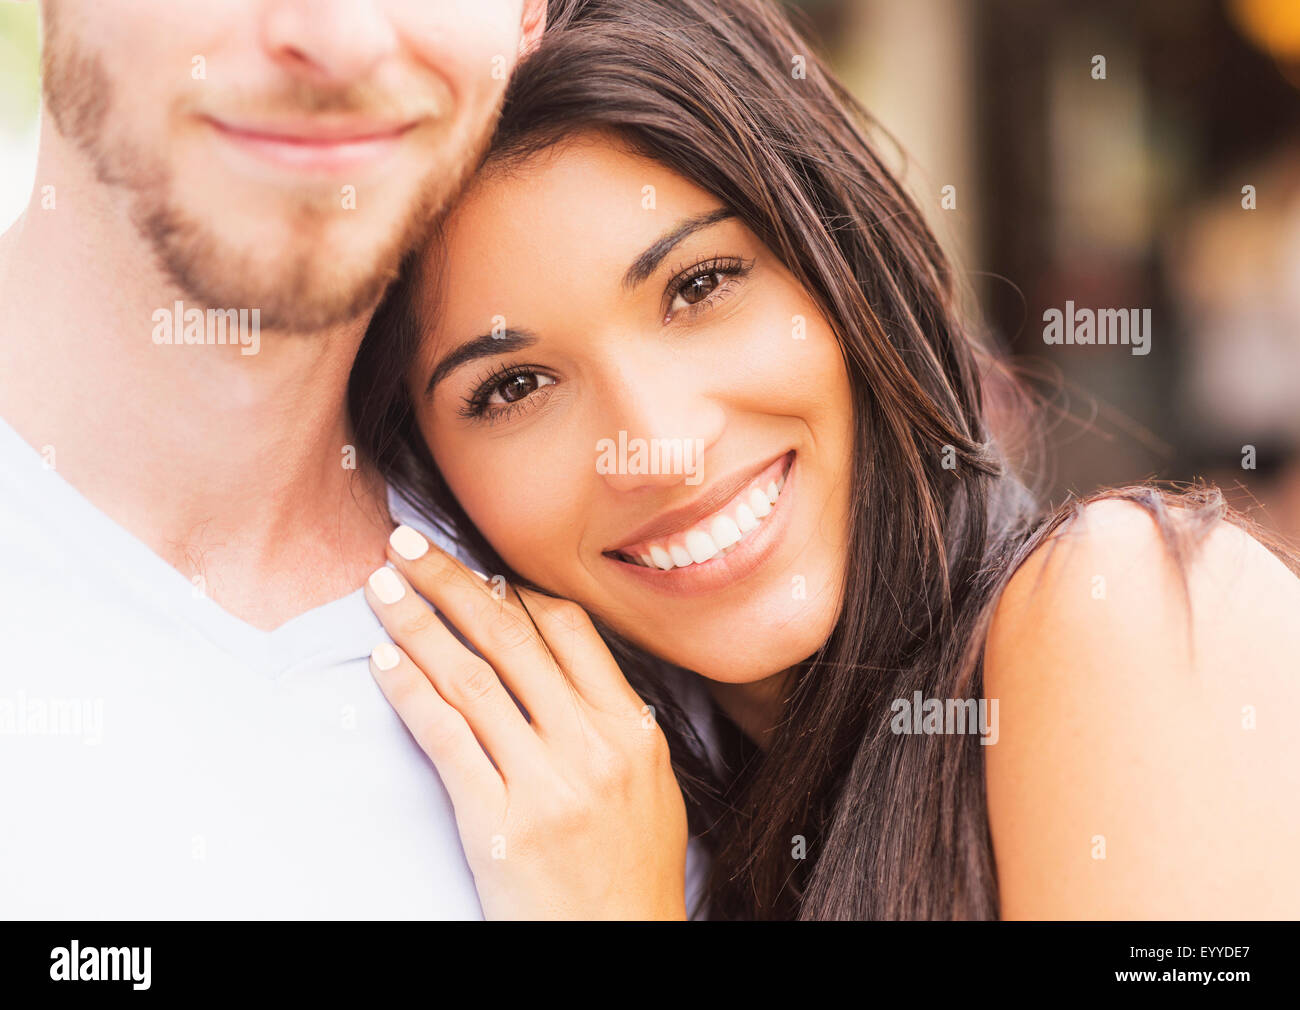 Hispanic woman hugging boyfriend on sidewalk Stock Photo